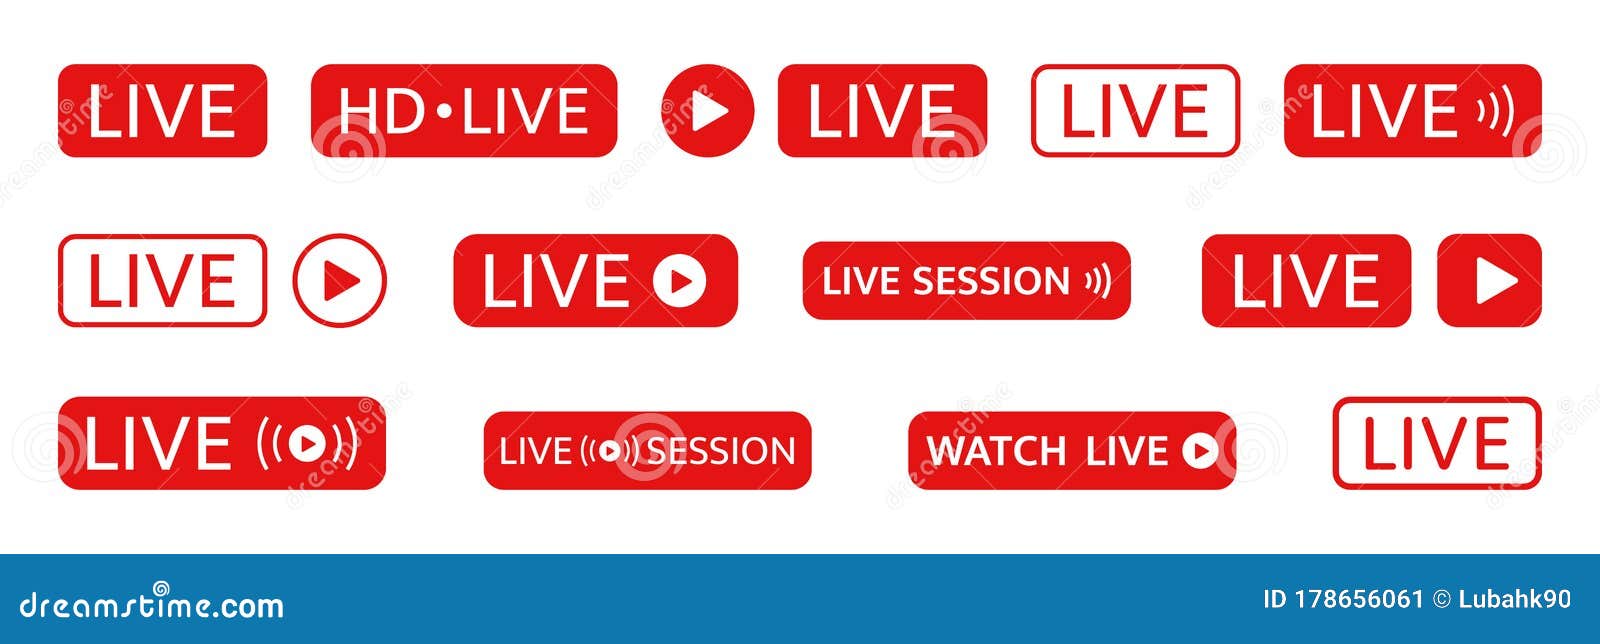 Live Stickers Set On White Background Social Media Template Live Stream Video News Symbol Broadcasting Online Stock Vector Illustration Of Branding Live